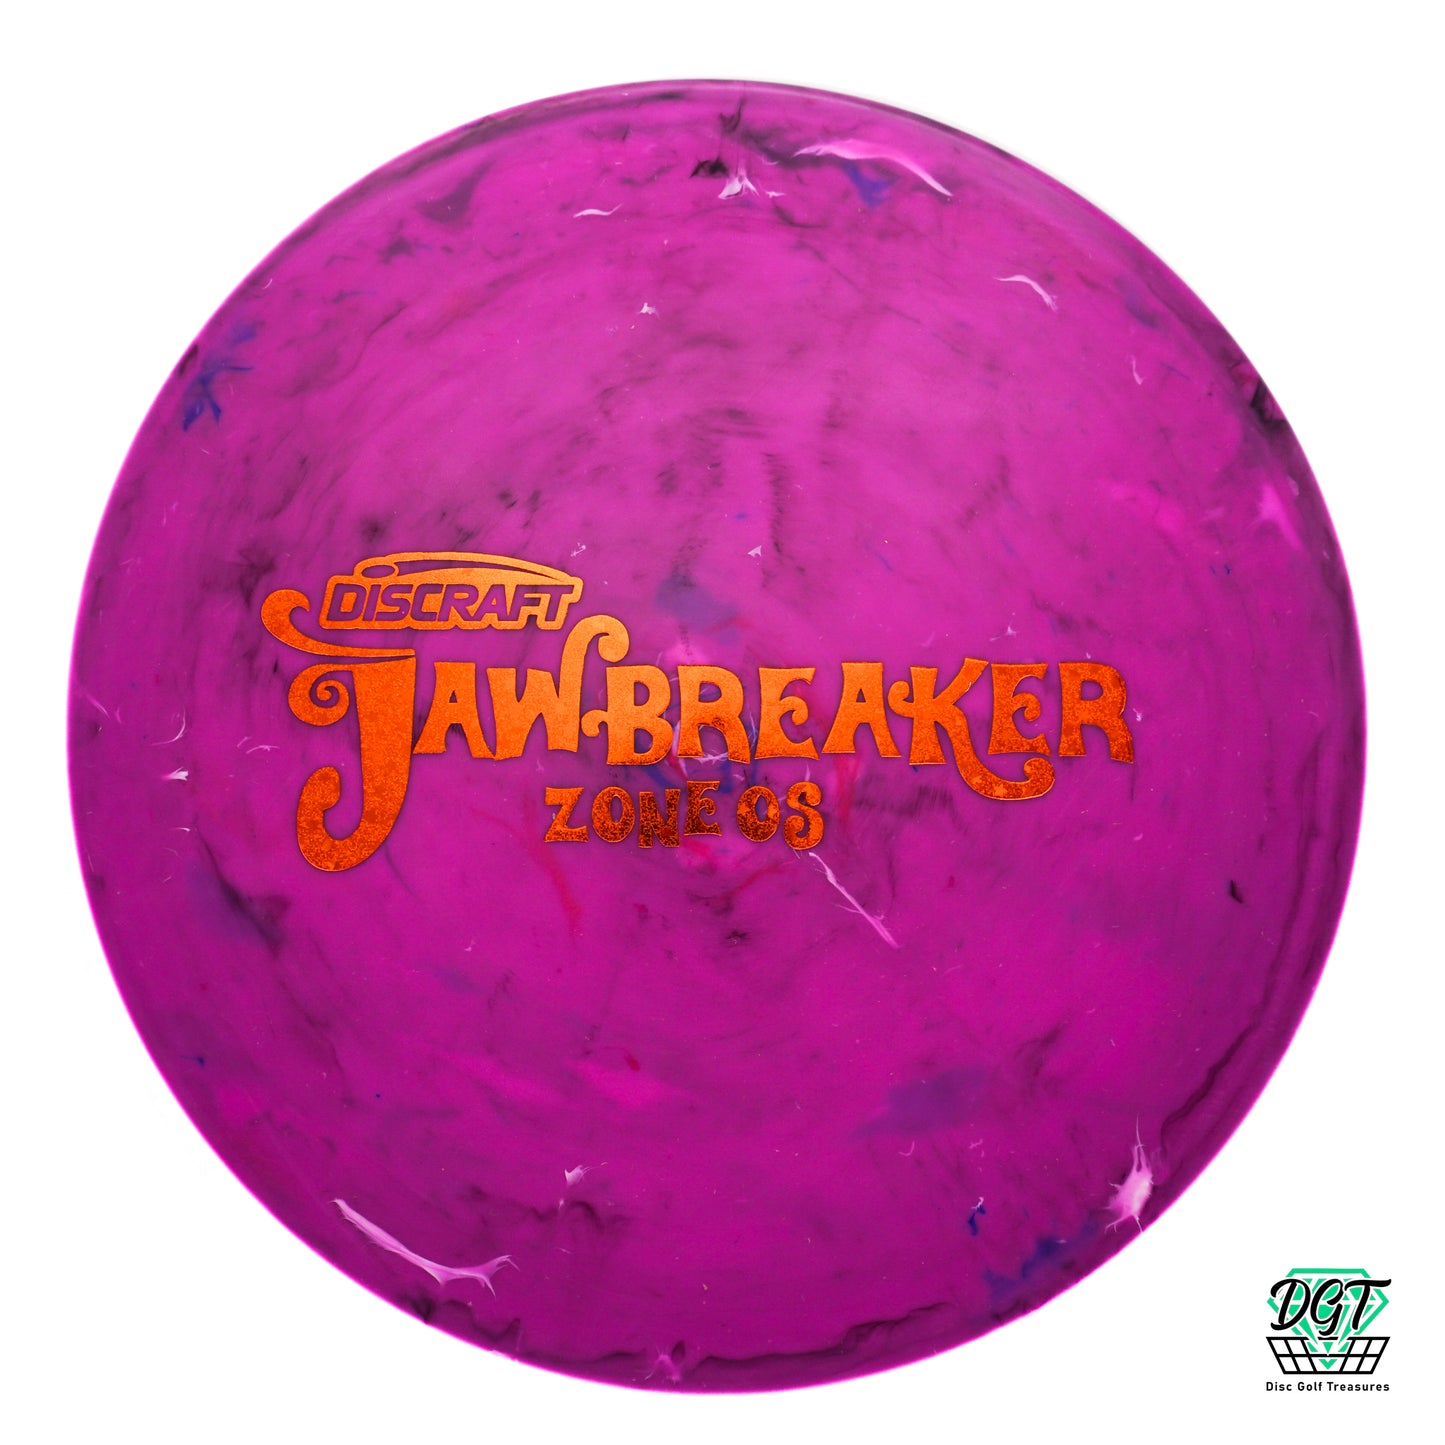 Jawbreaker Zone OS